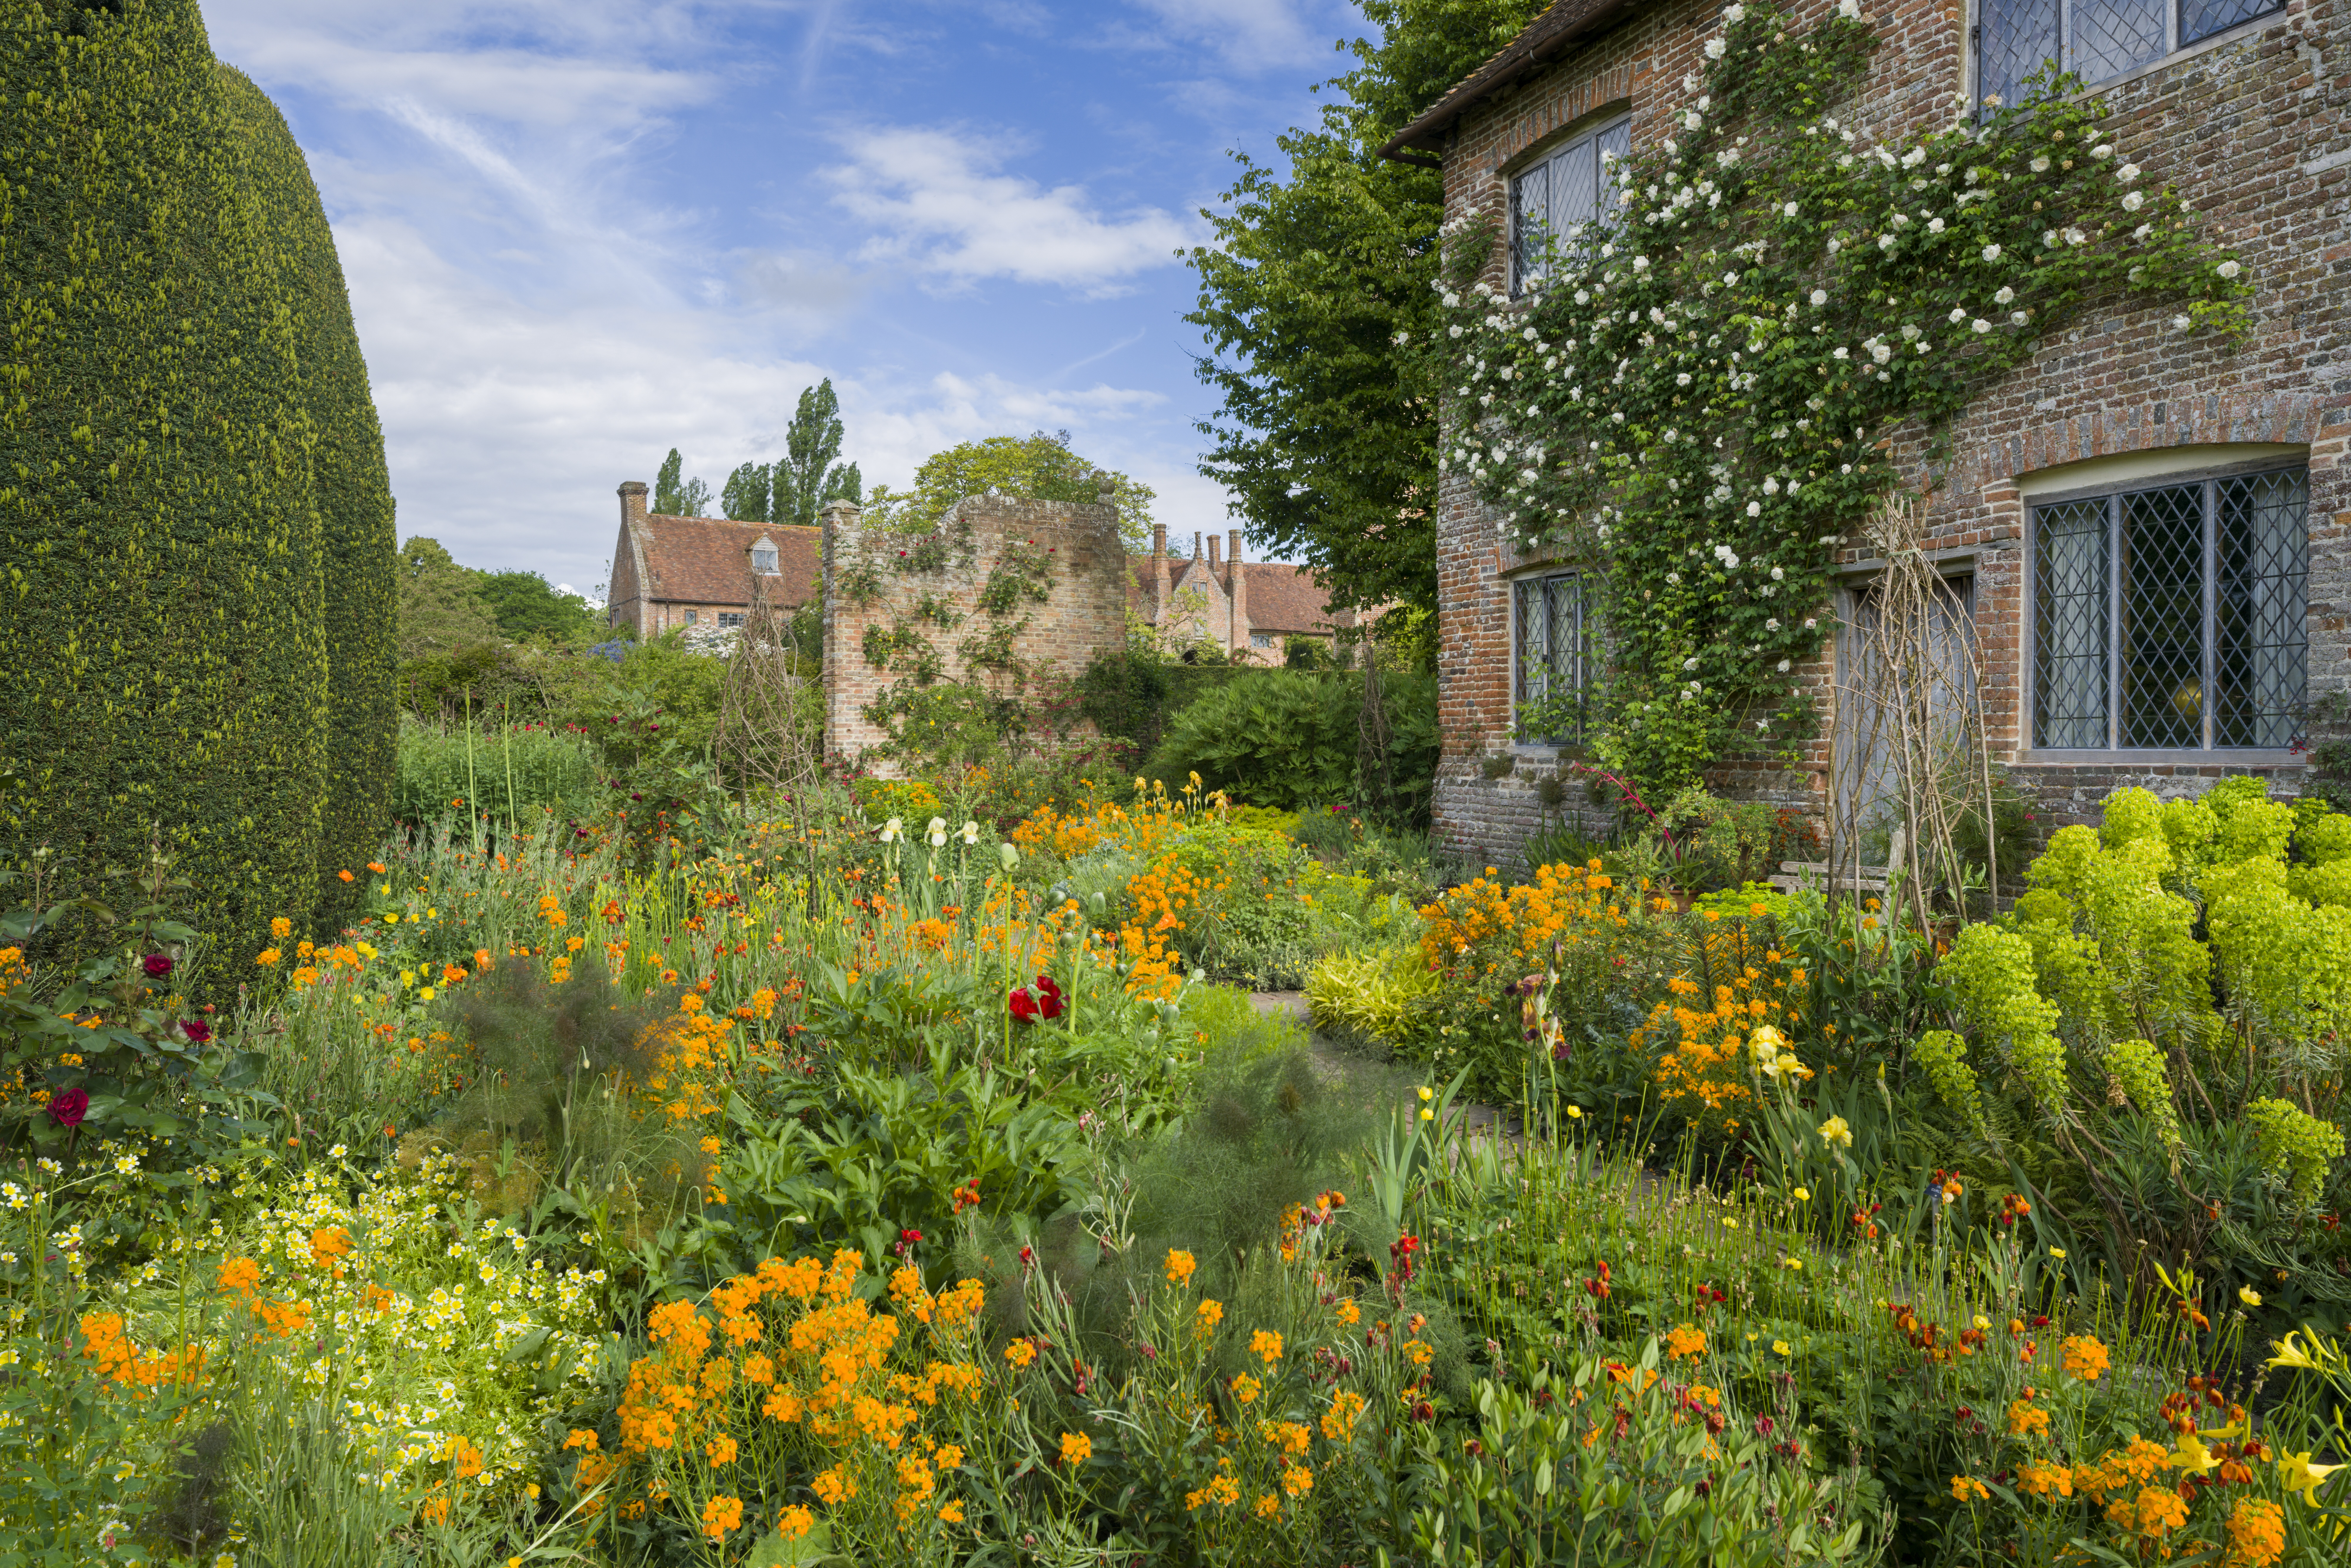 The Cottage Garden at Sissinghurst (Andrew Butler/National Trust Images/PA)